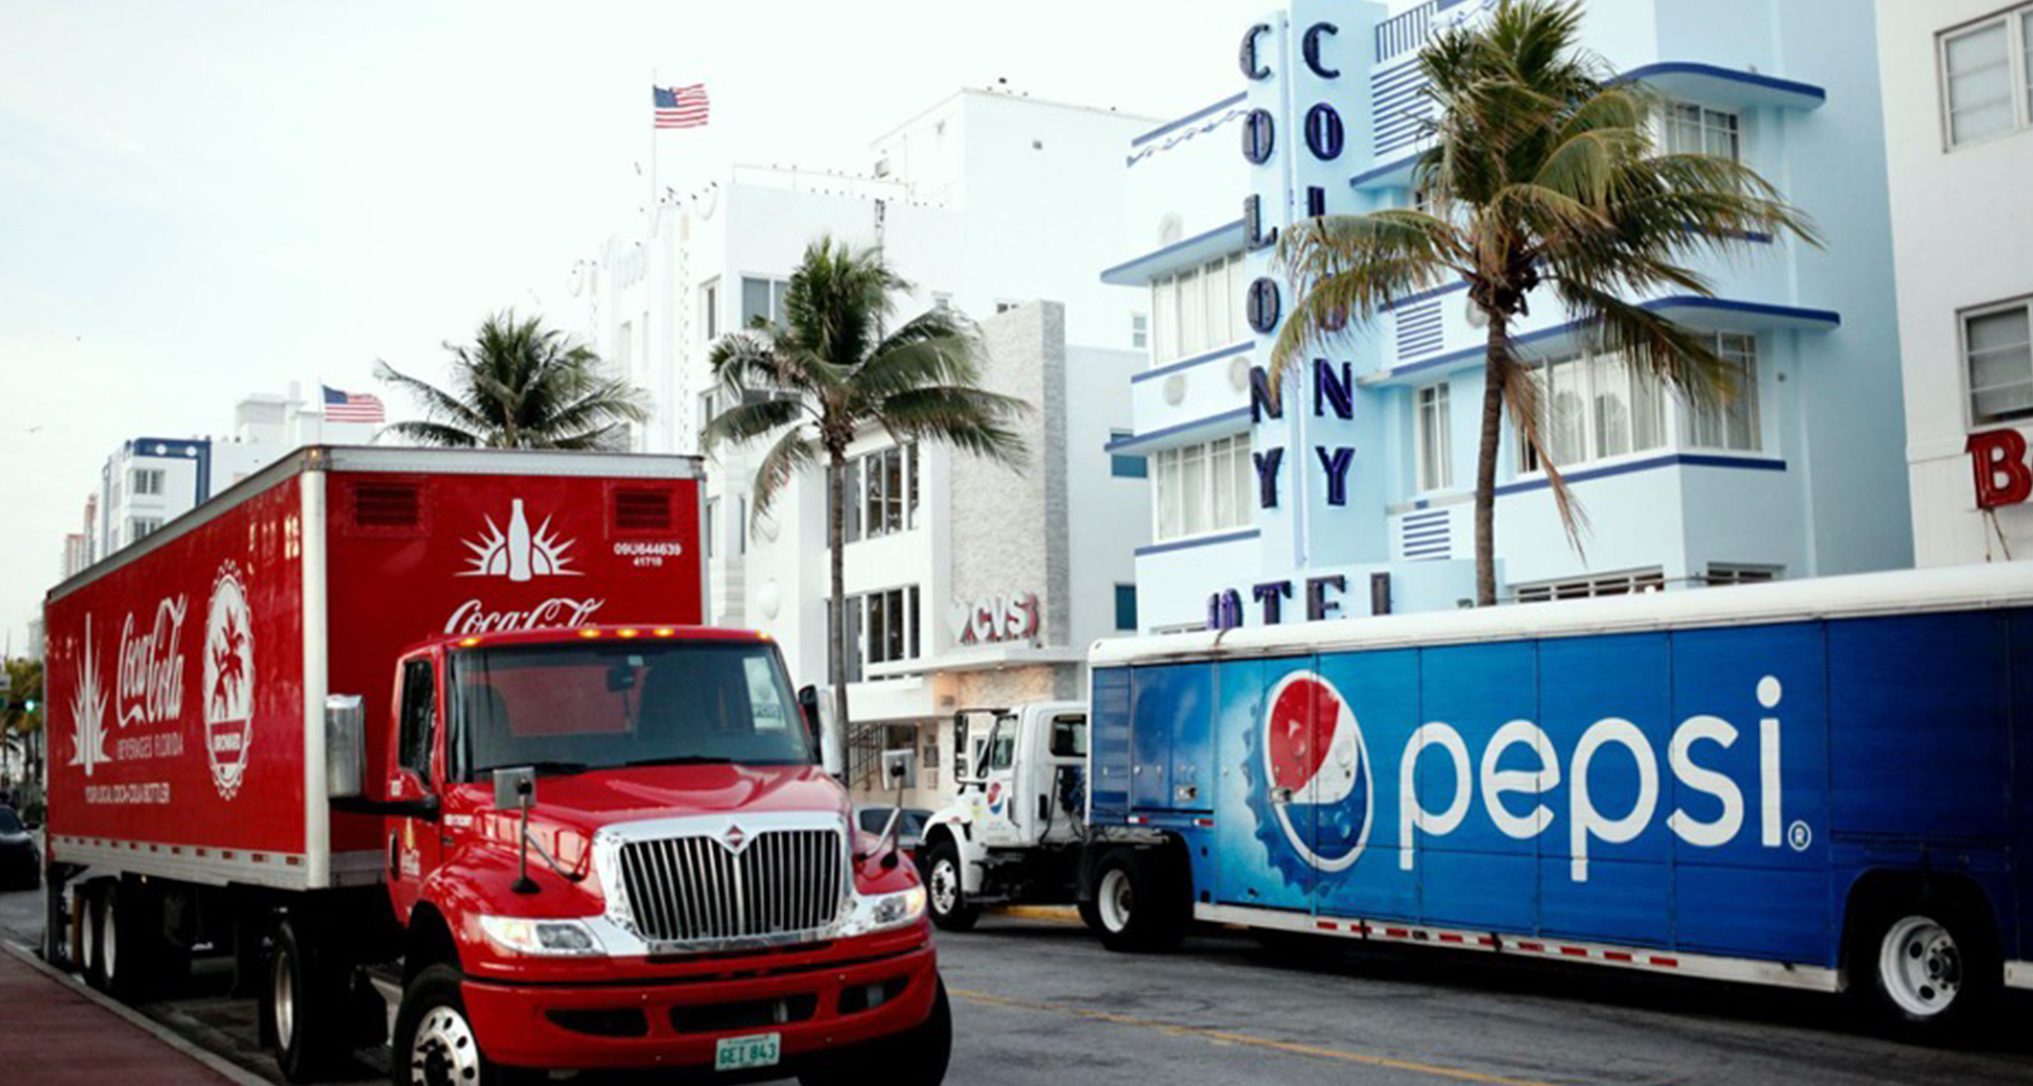 coke and pepsi delivery trucks